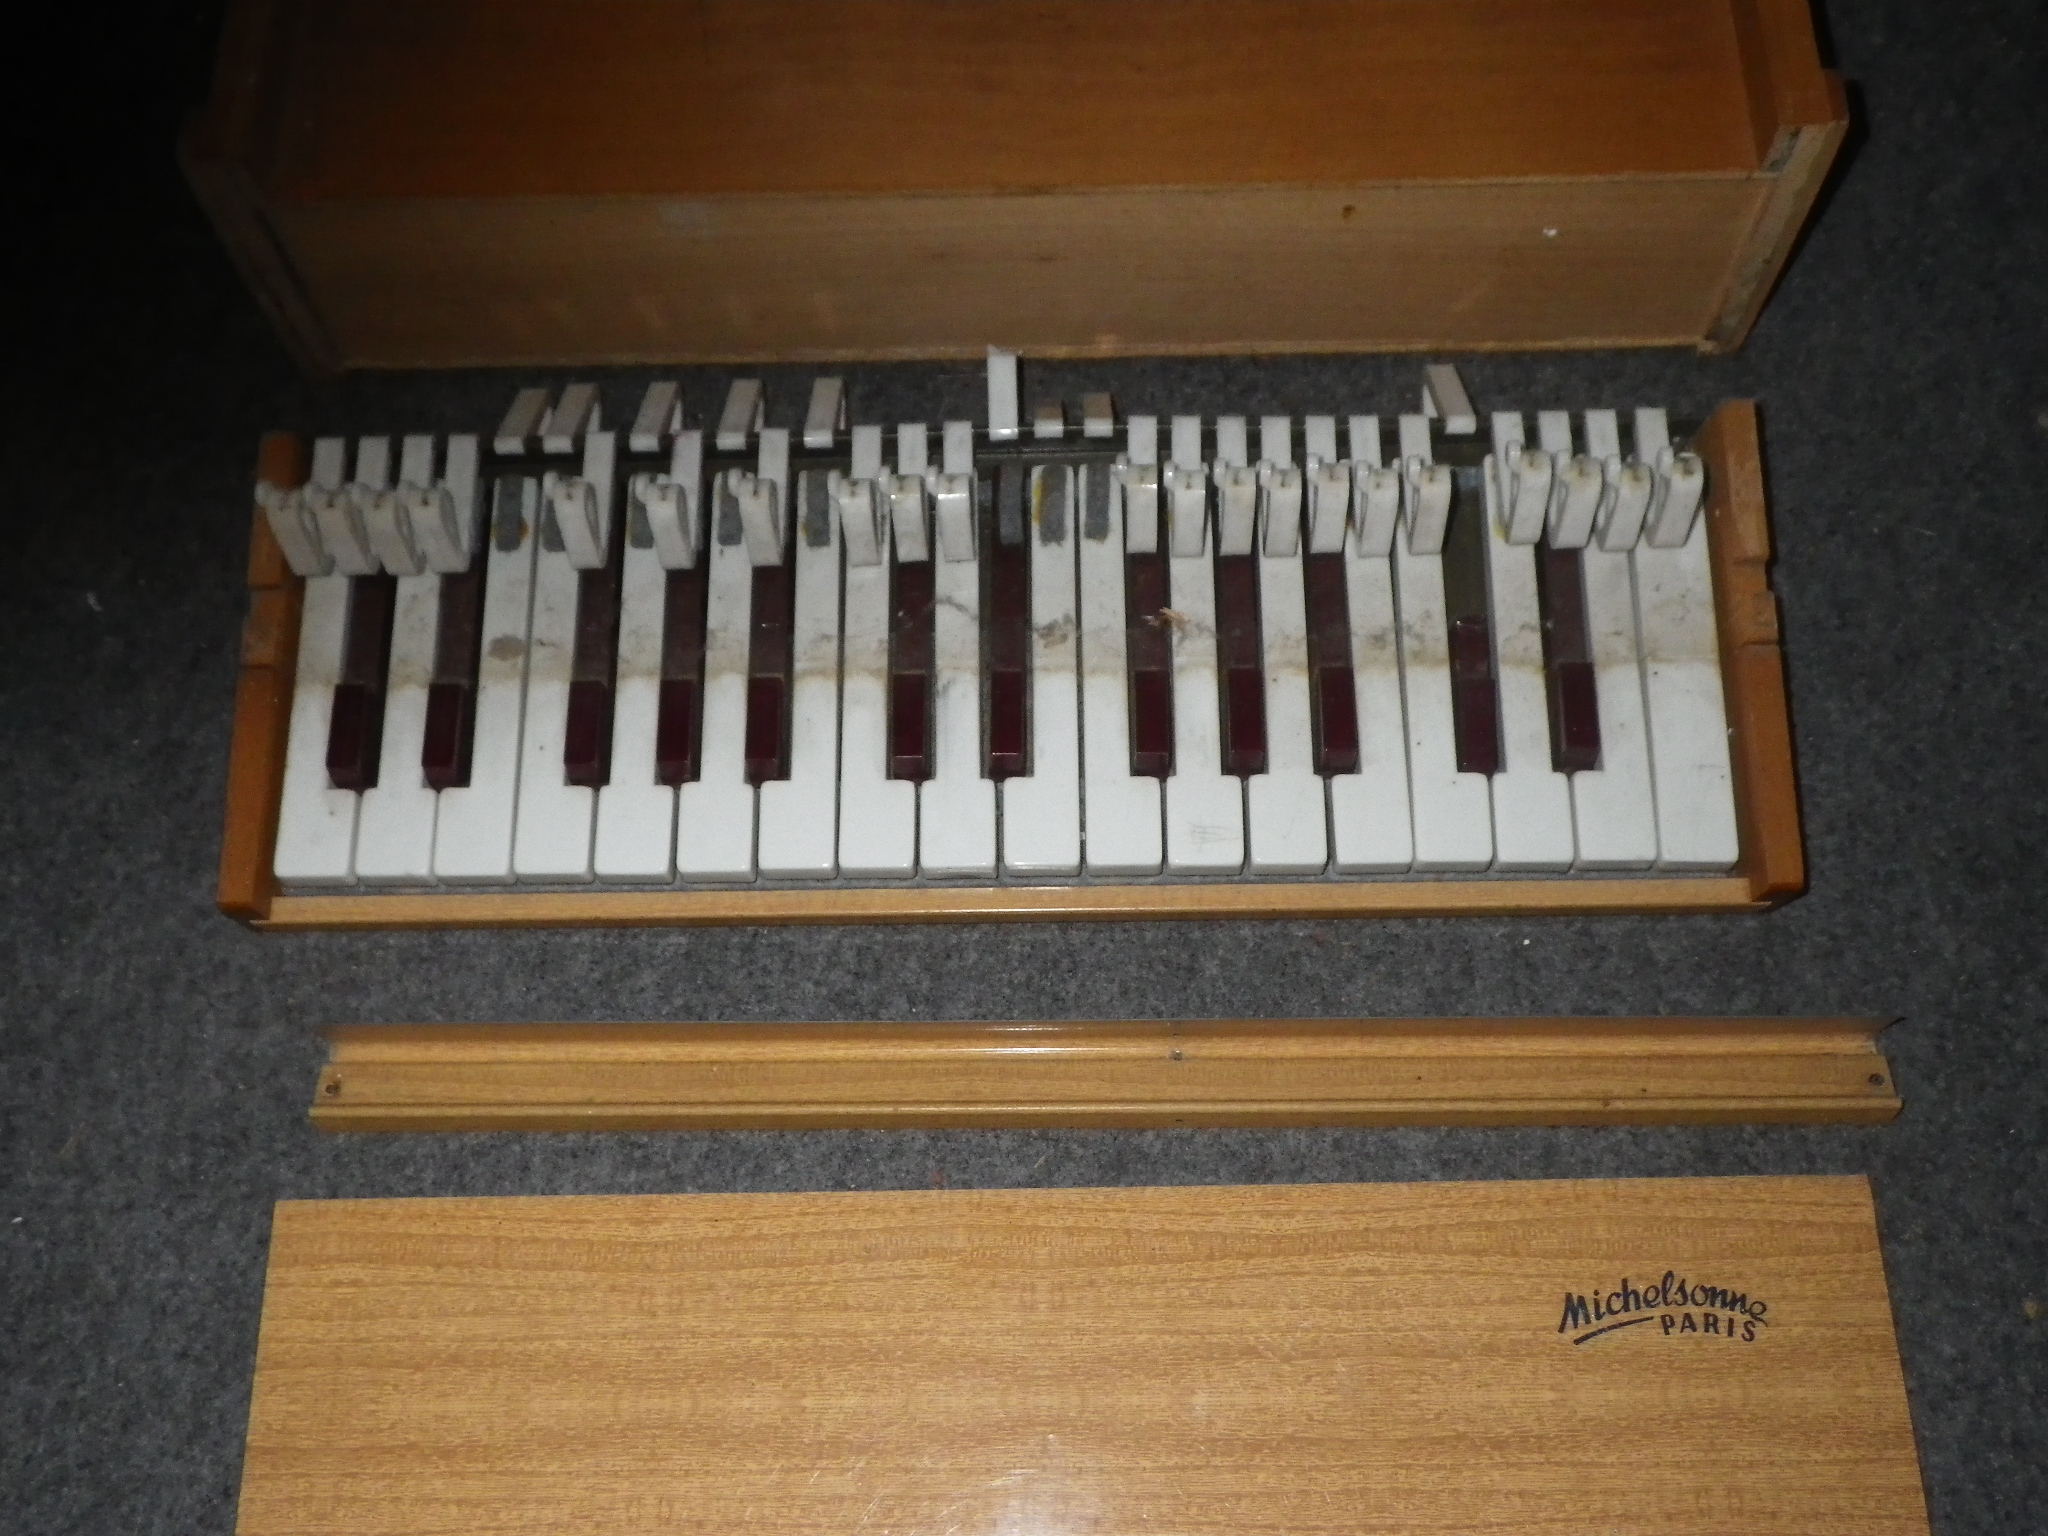 michelsonne-paris-toy-piano-30-keys-2504689.jpg